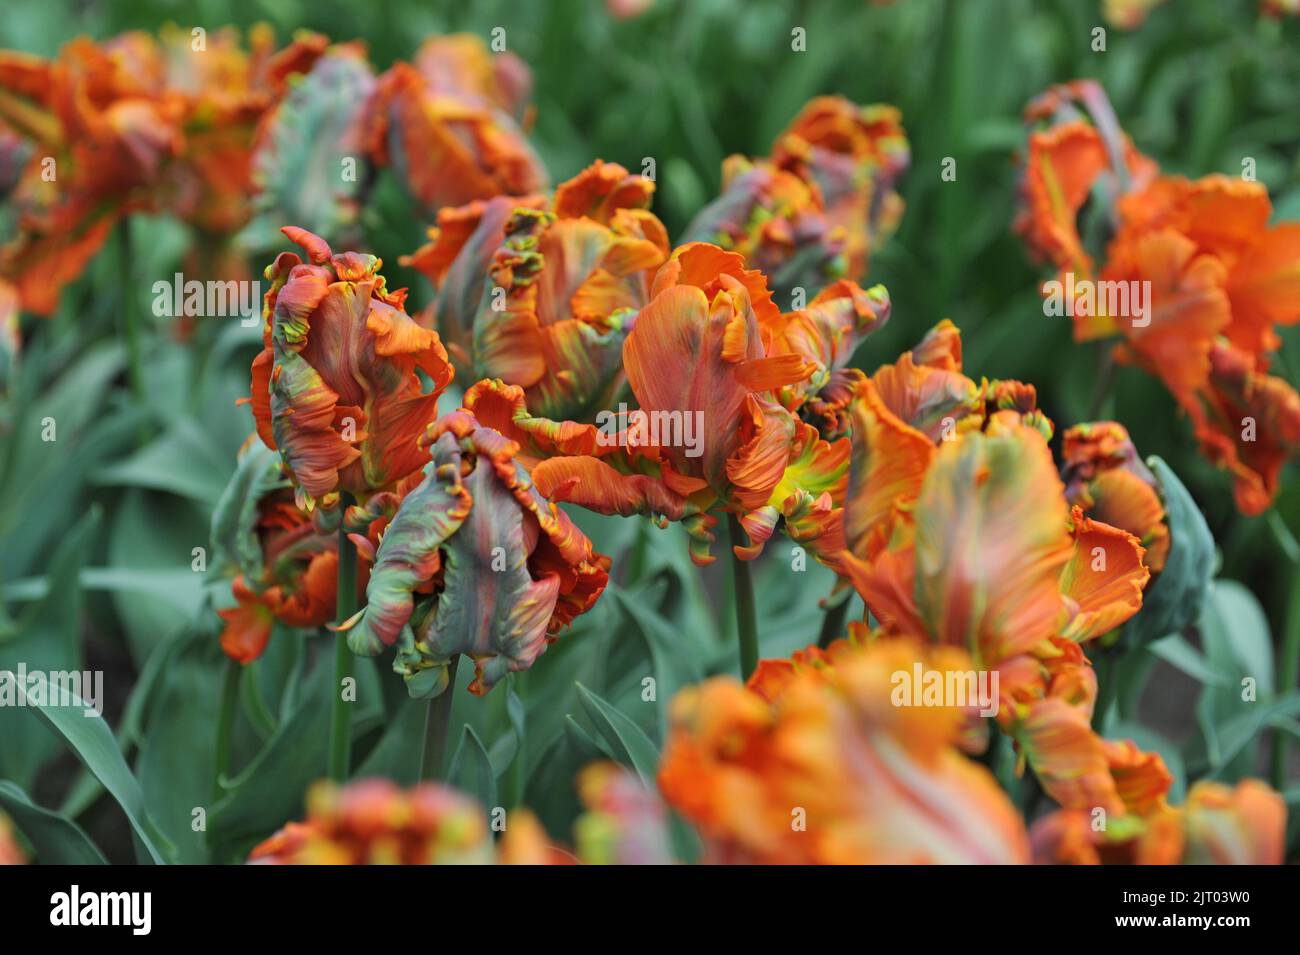 Orange Parrot tulips (Tulipa) Prinses Irene Parkiet bloom in a garden in April Stock Photo